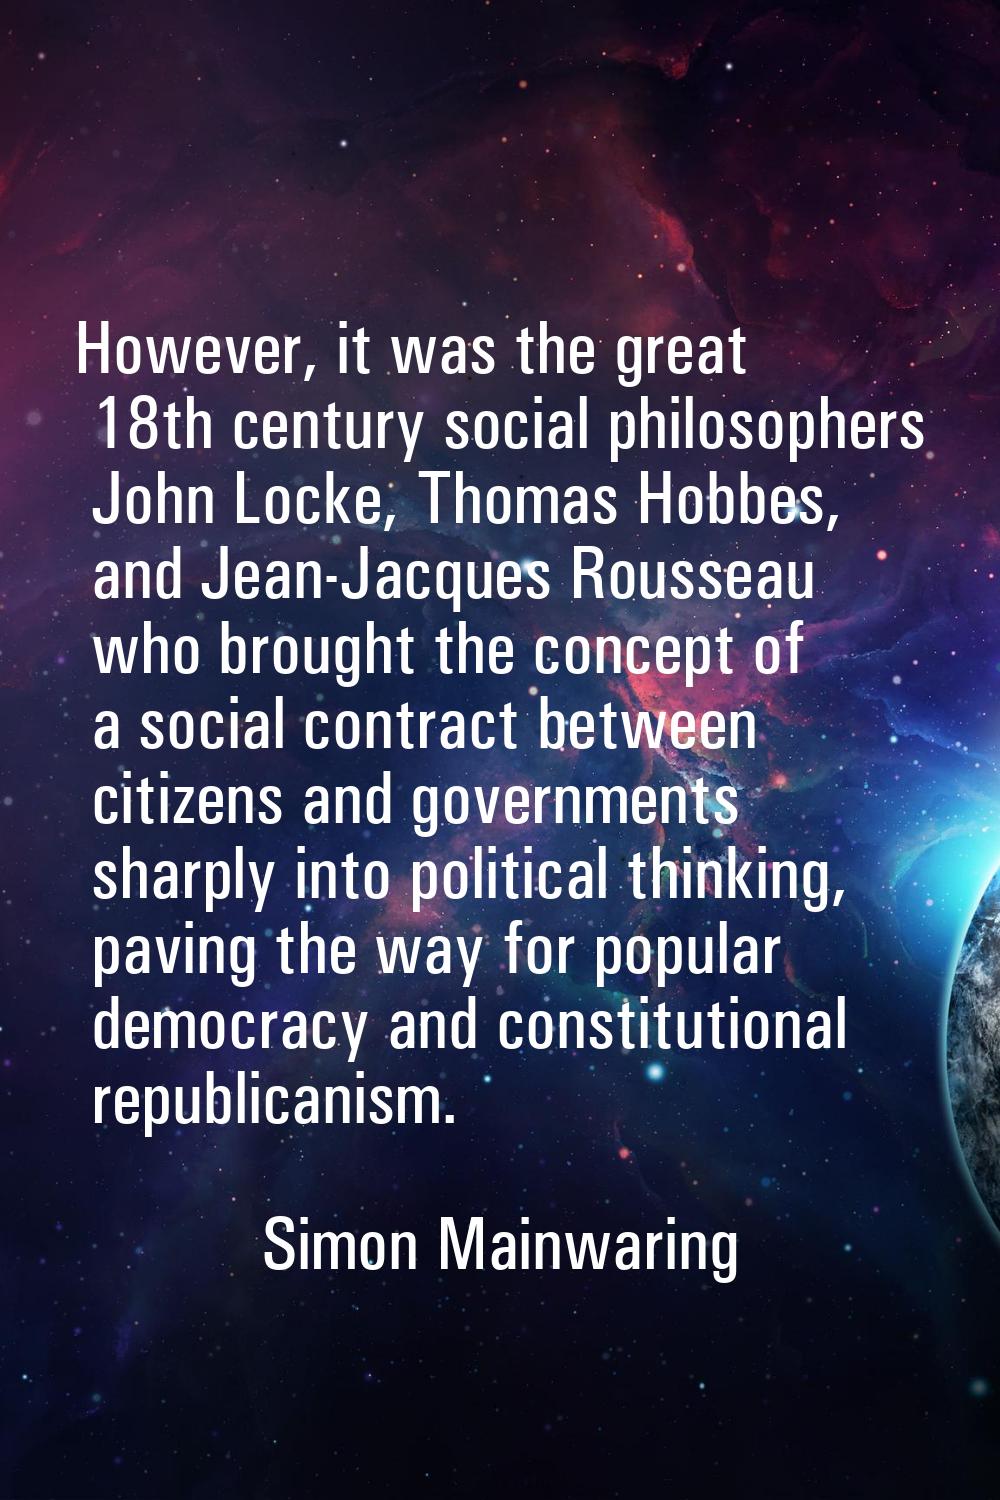 However, it was the great 18th century social philosophers John Locke, Thomas Hobbes, and Jean-Jacq